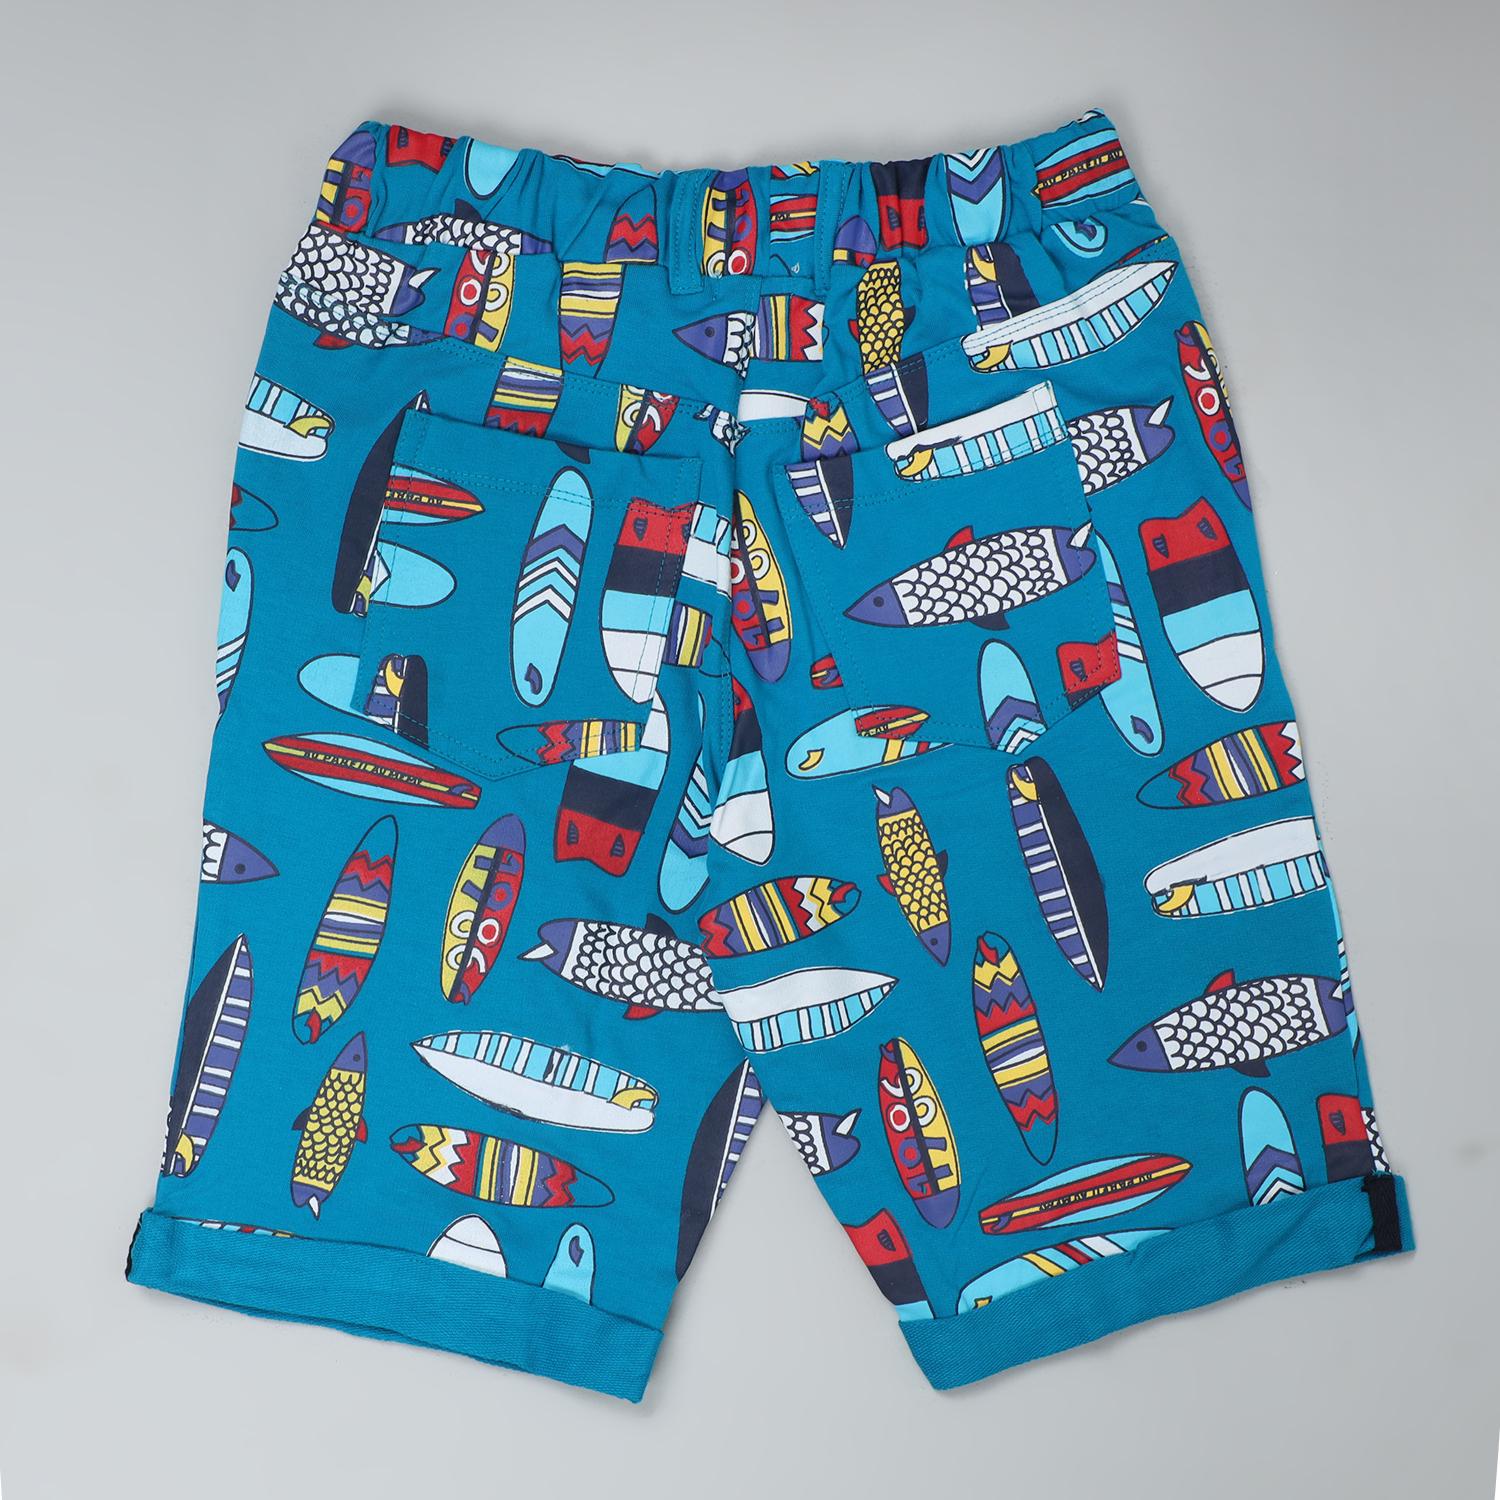 Clothing Boys Pattern Shorts-Turquoise Printed